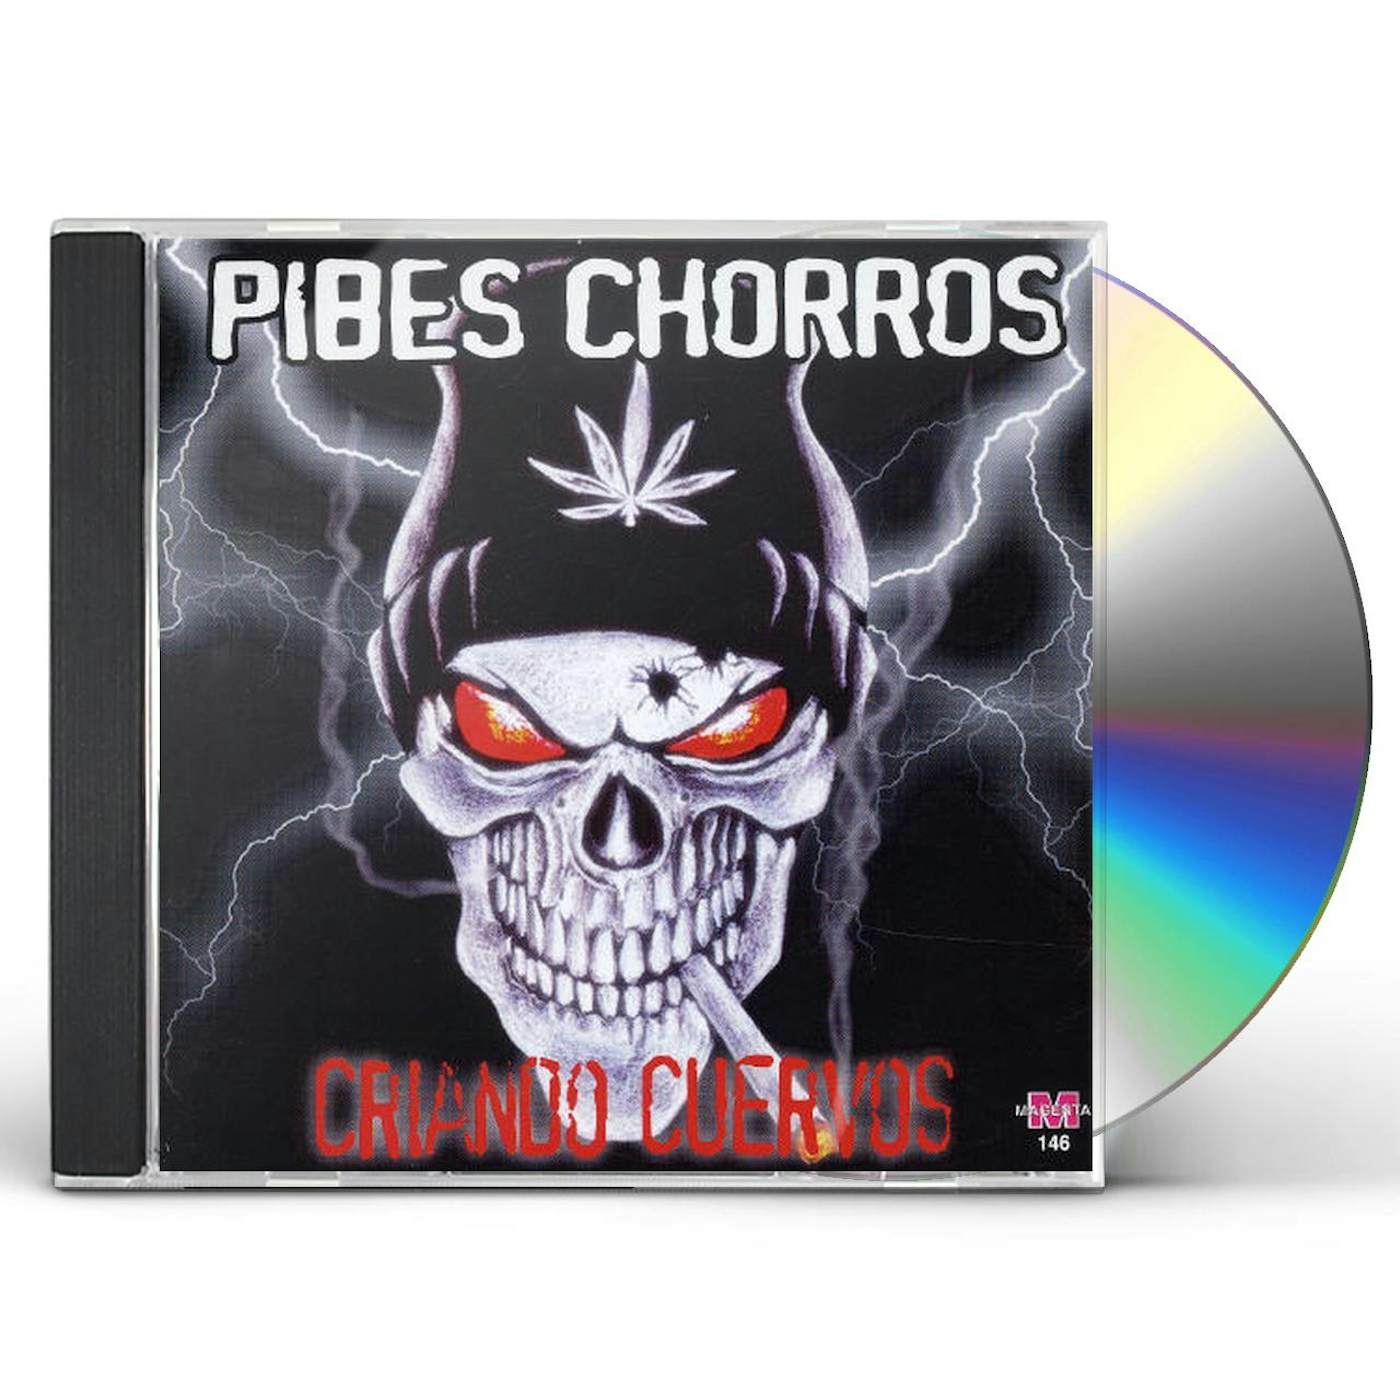 Pibes Chorros Store: Official Merch & Vinyl